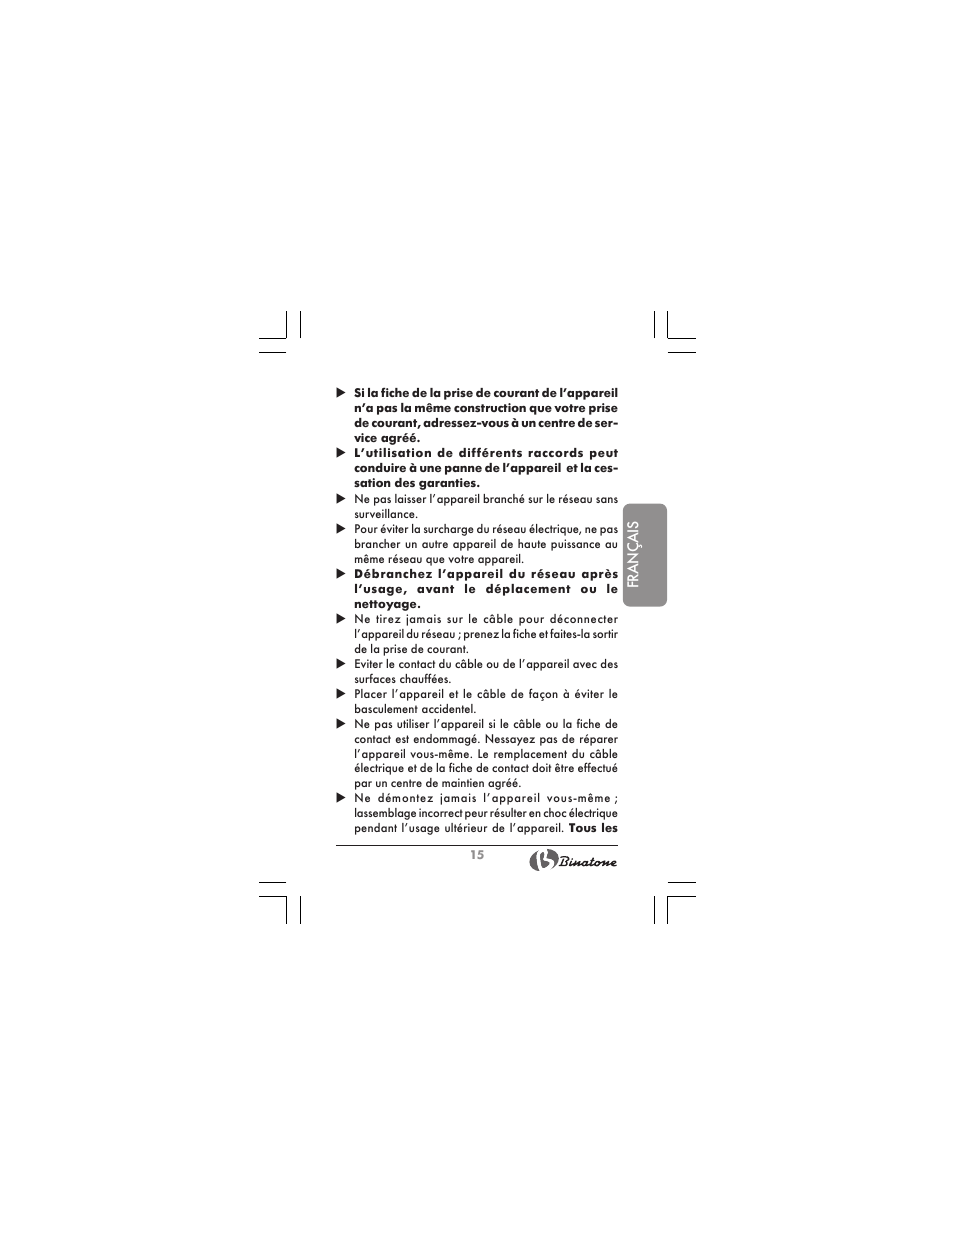 Binatone HR-09 User Manual | Page 15 / 48